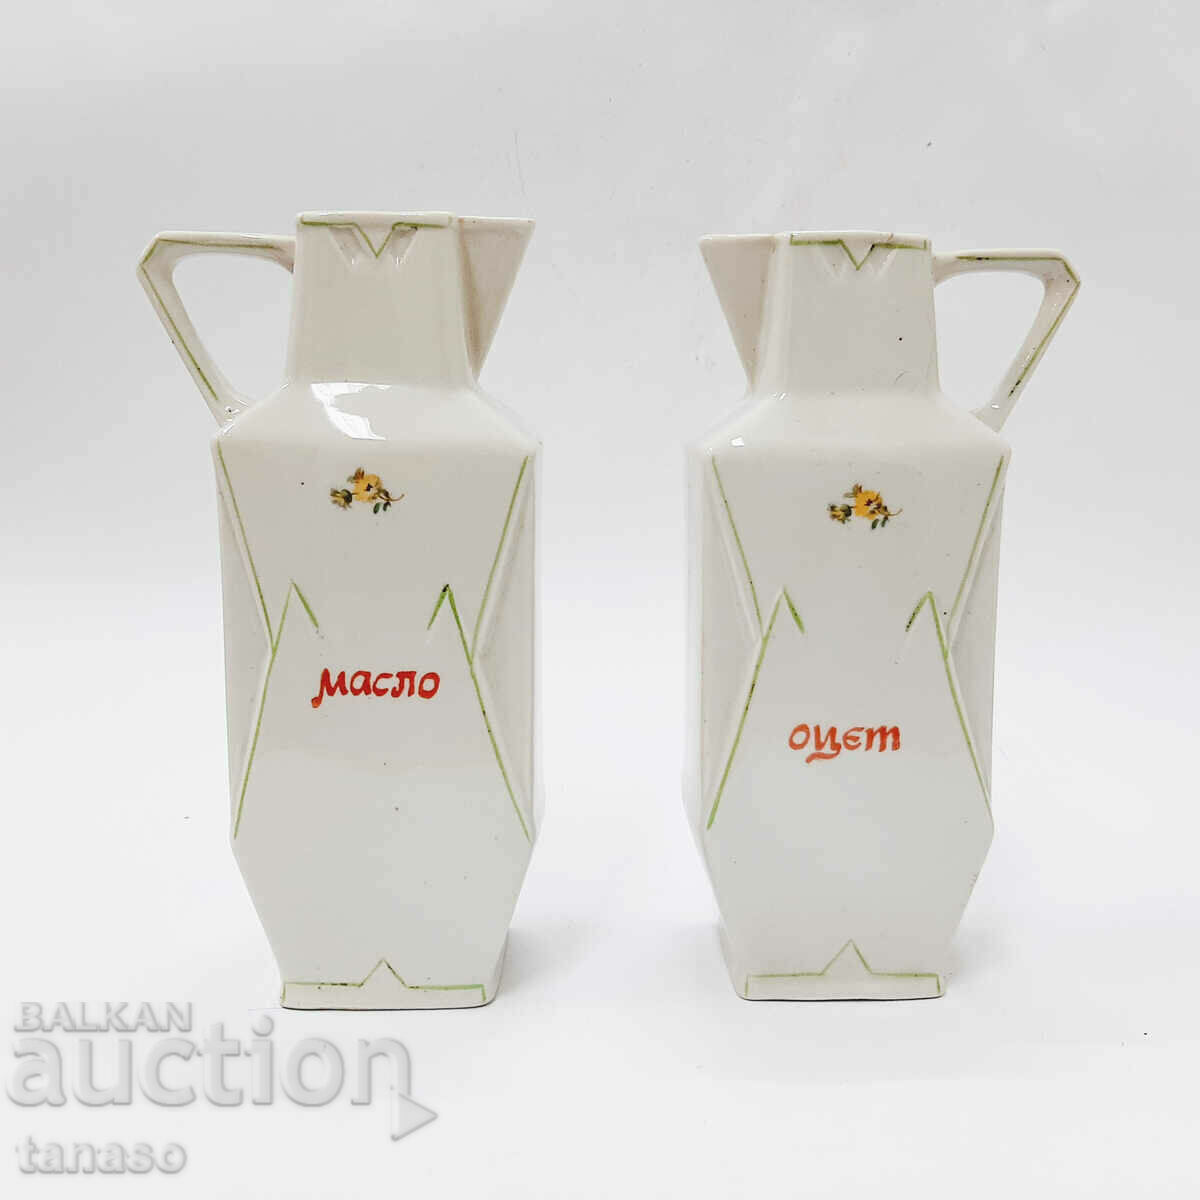 Old porcelain jugs for oil and vinegar (13.2)